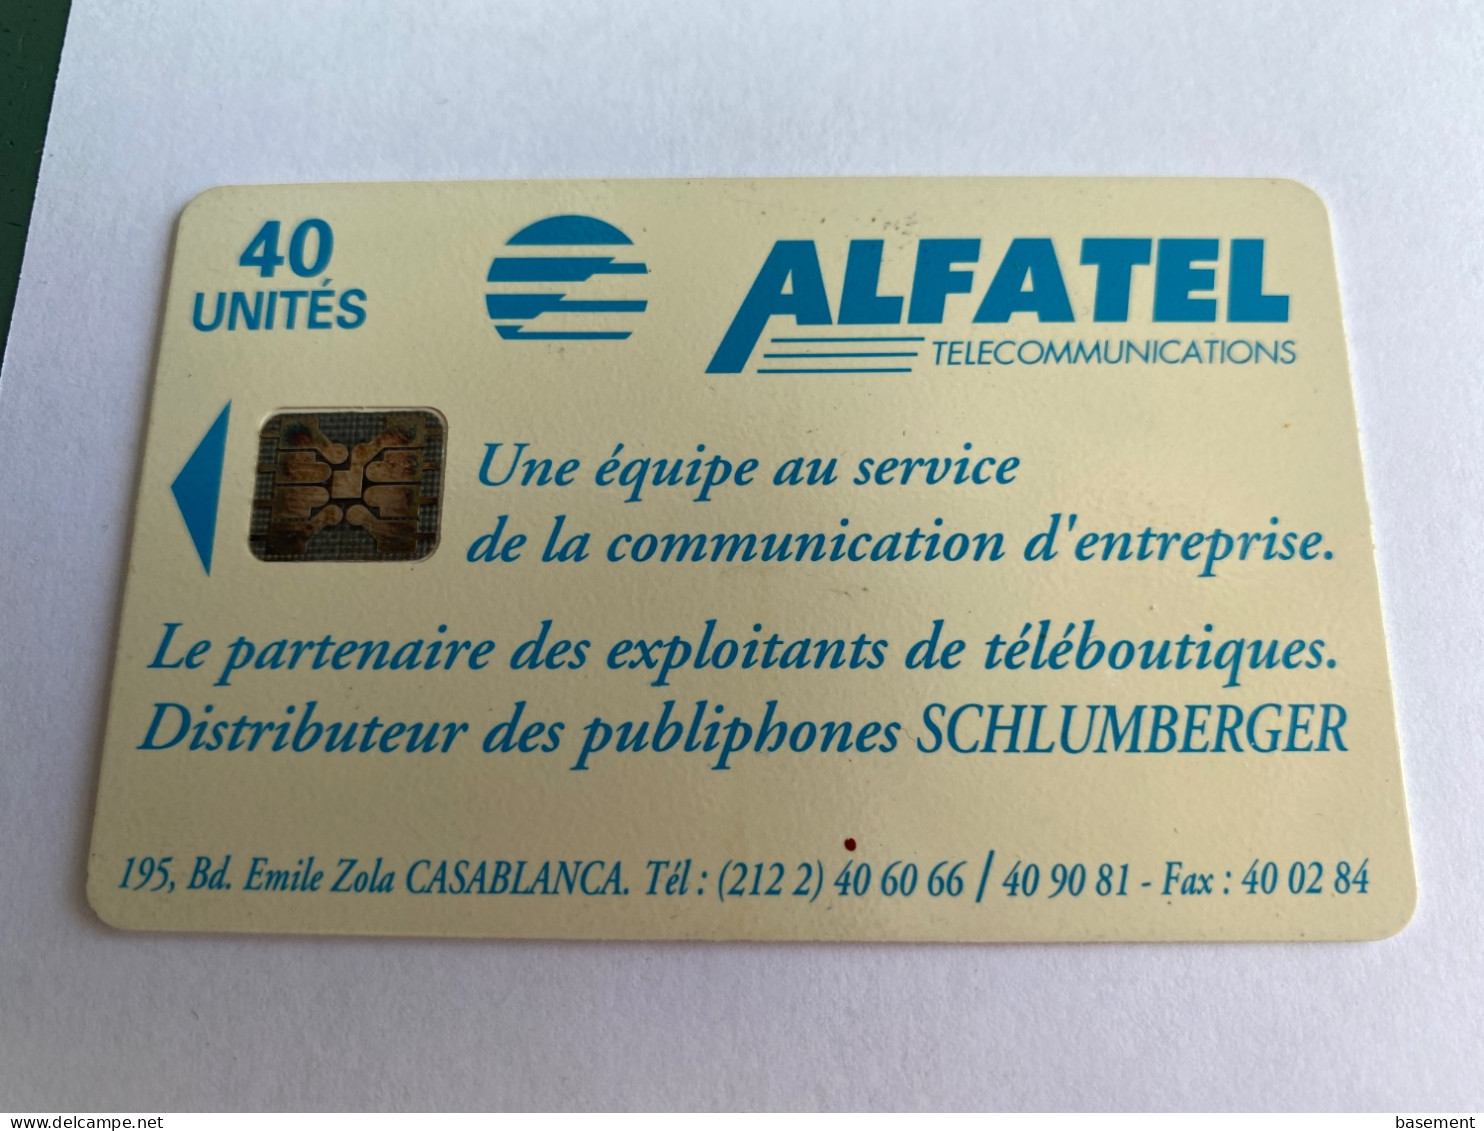 1:006 - Morocco Chip Alcatel SC5 C43000779 - Marruecos